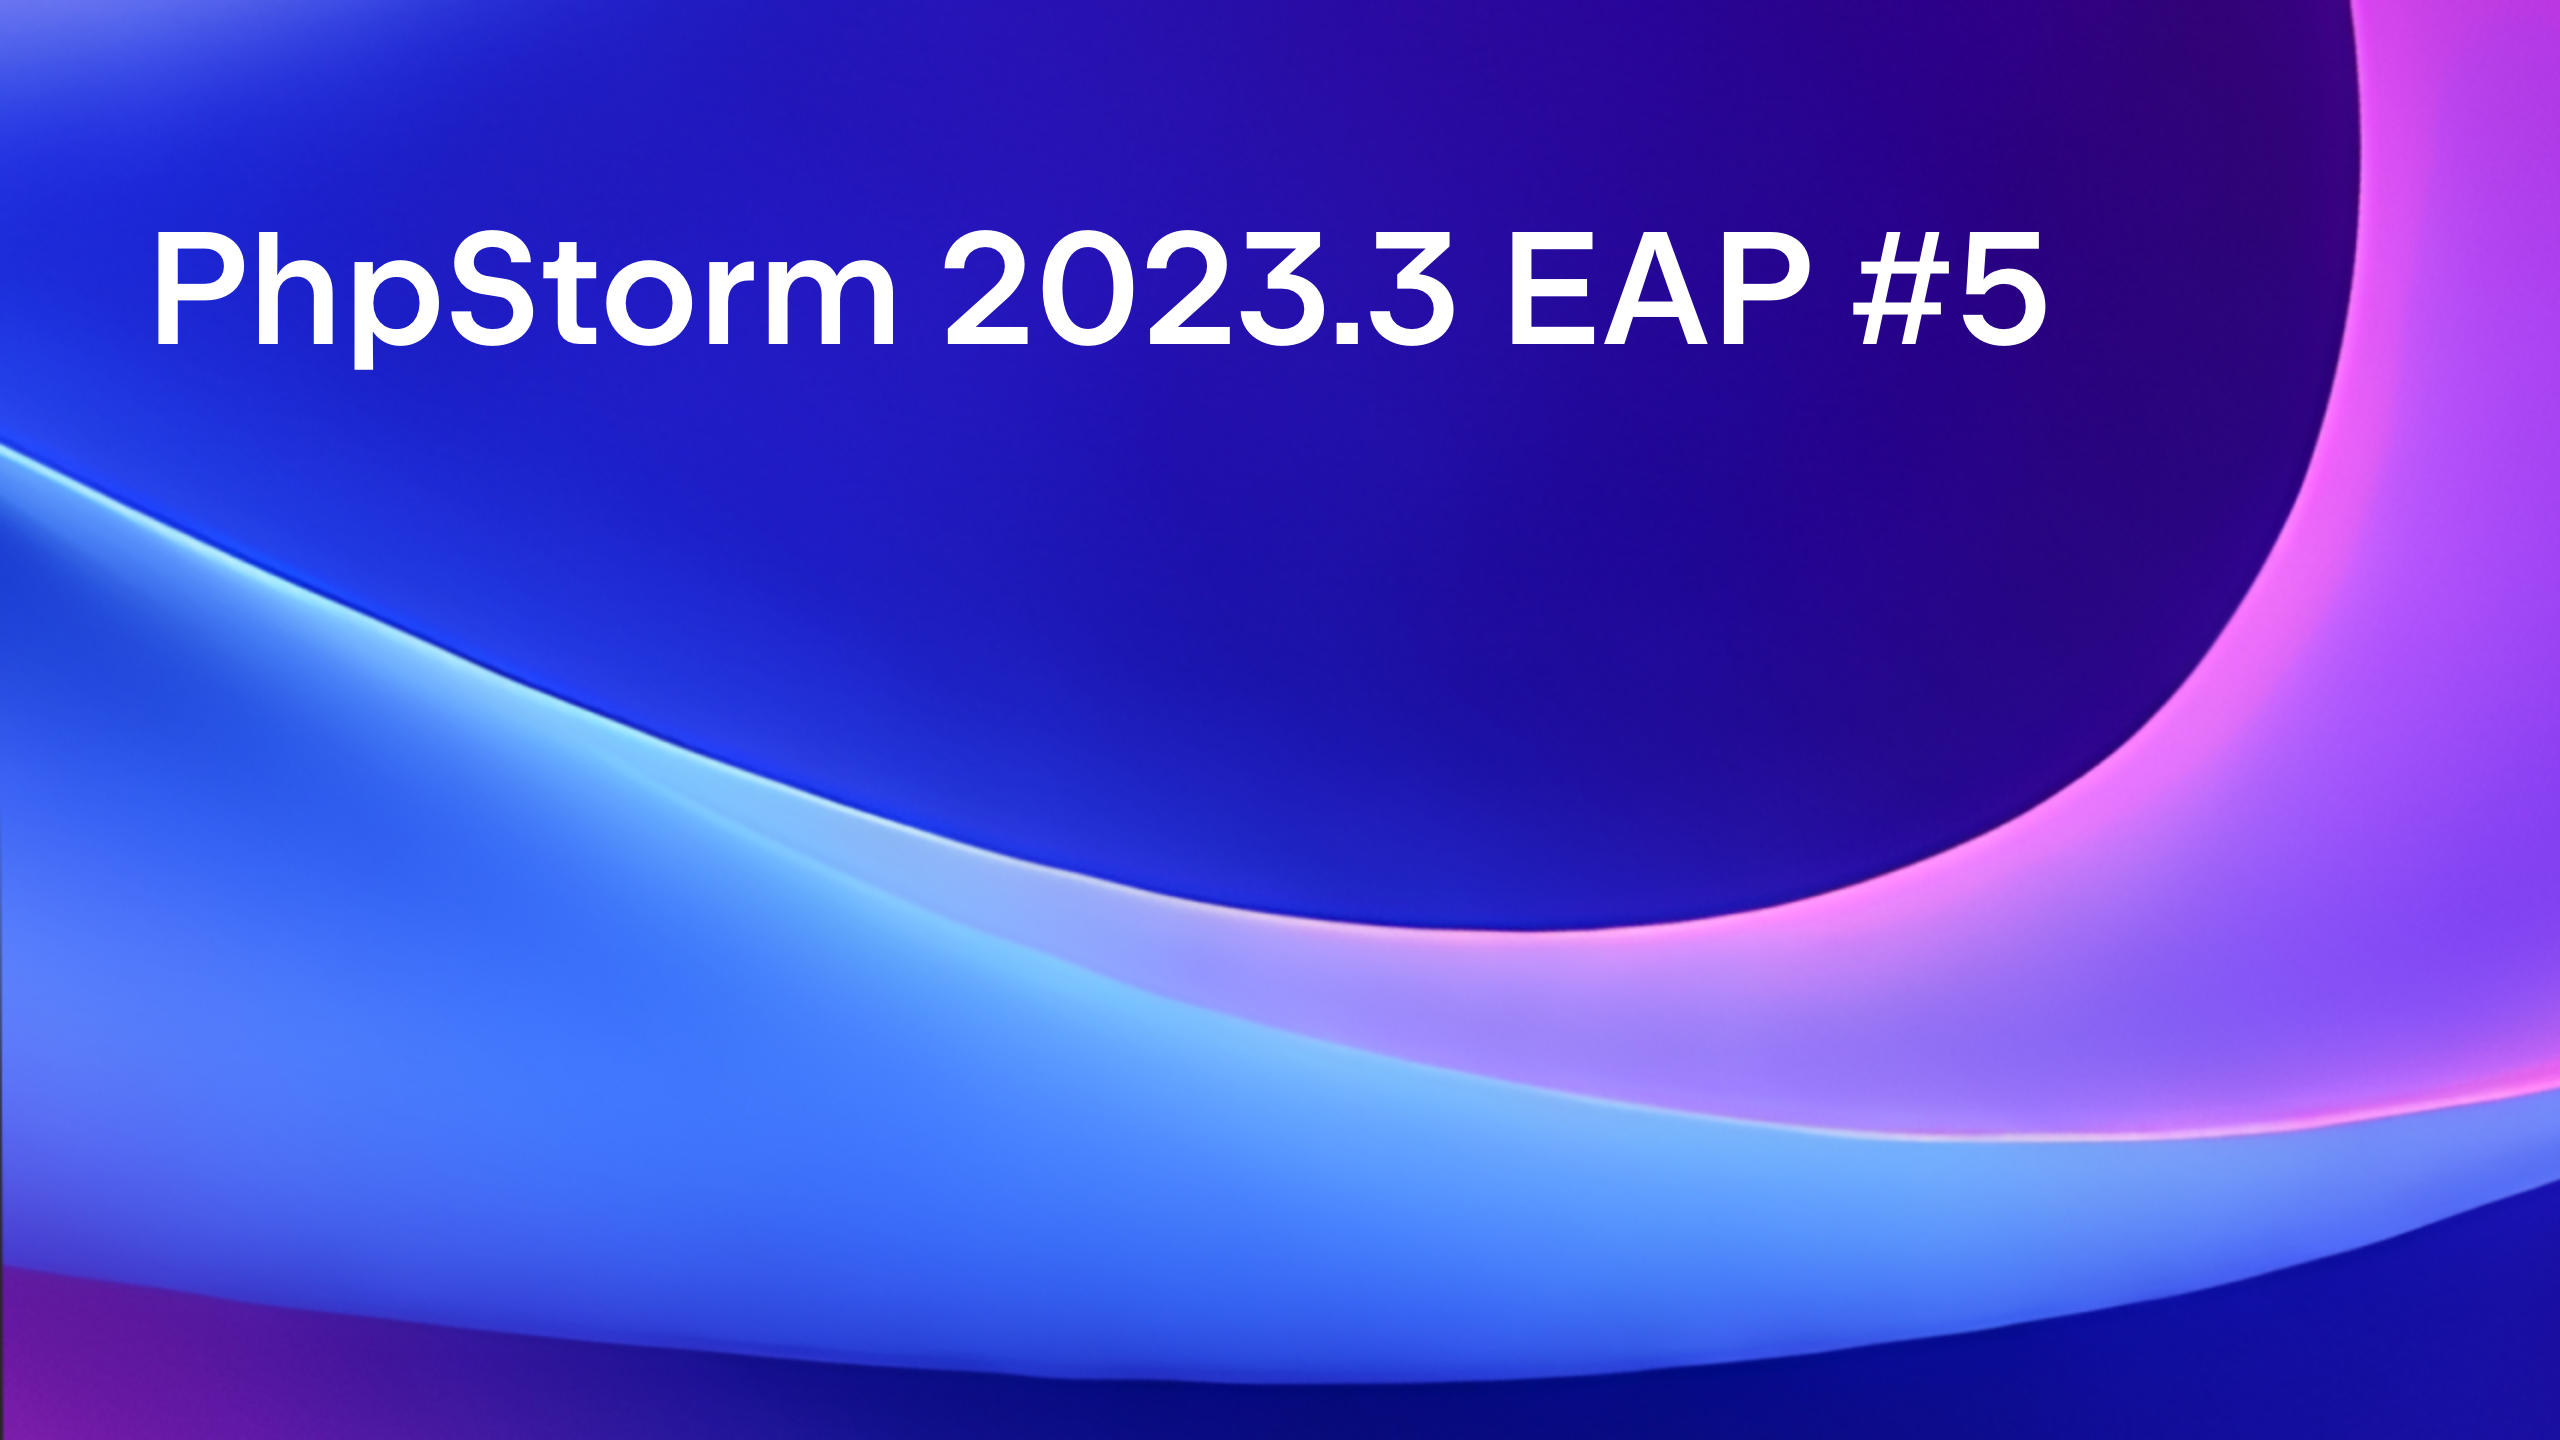 PhpStorm 2023.3 EAP #5